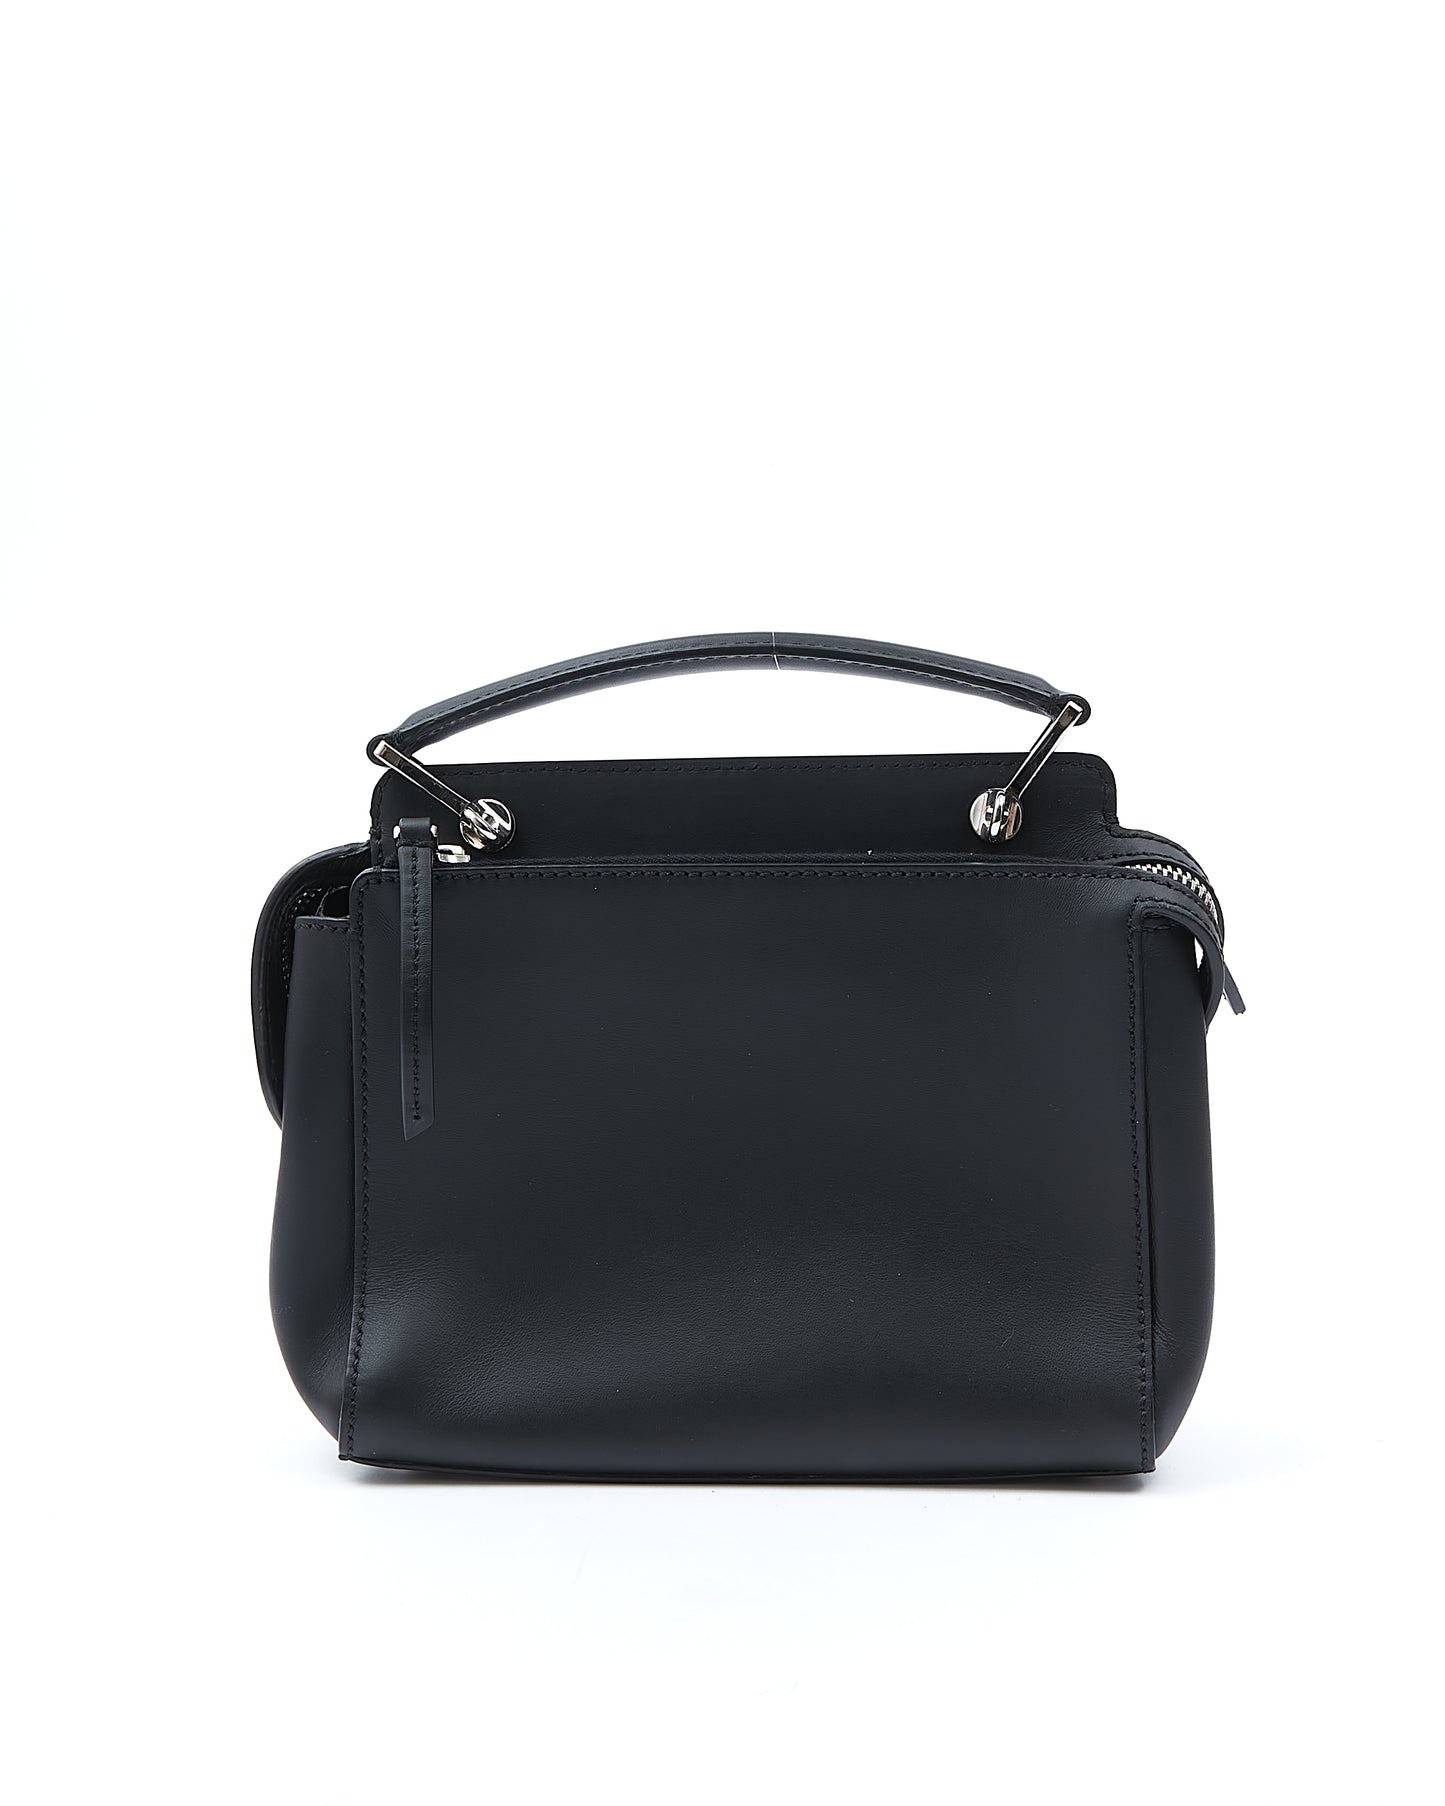 Fendi Black Leather Whipstitch Dotcom Small Bag